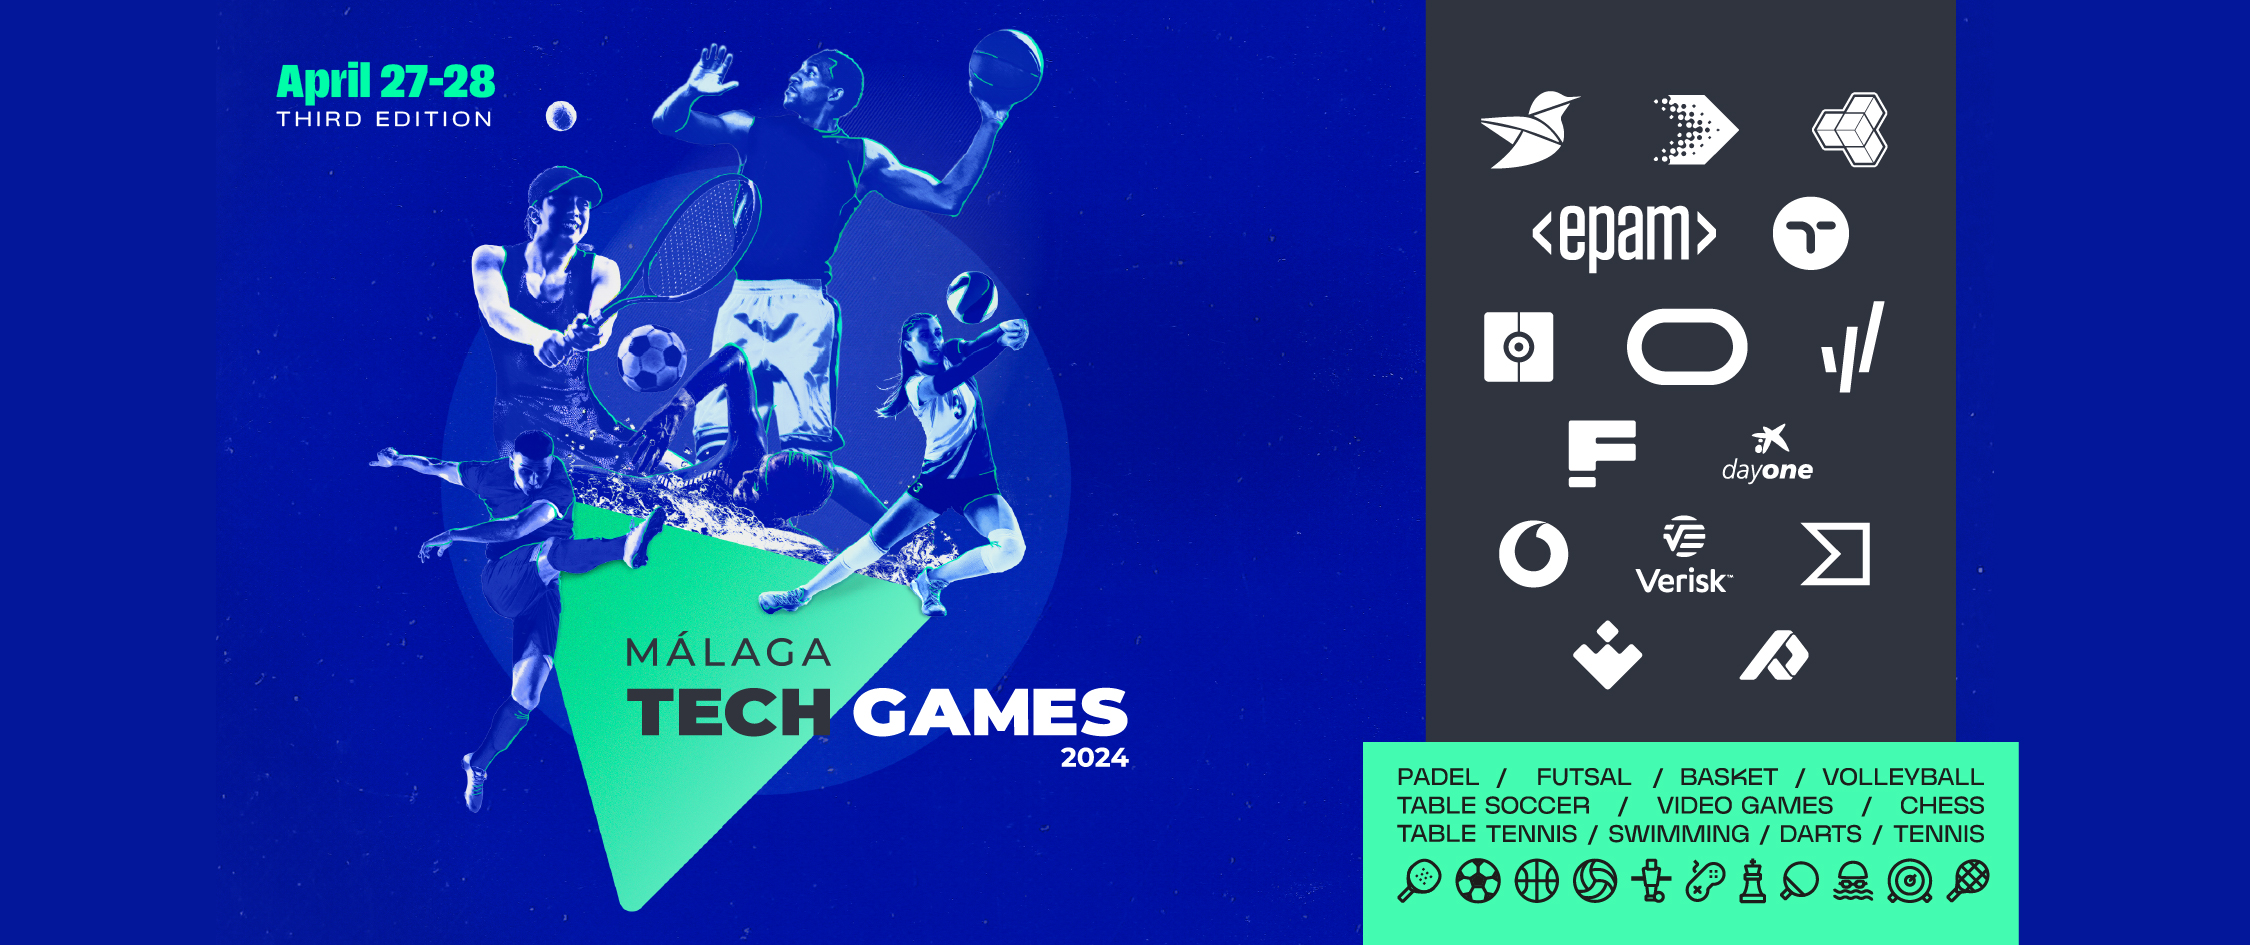 Málaga Tech Games: Innovación y deporte unidos en Málaga 53